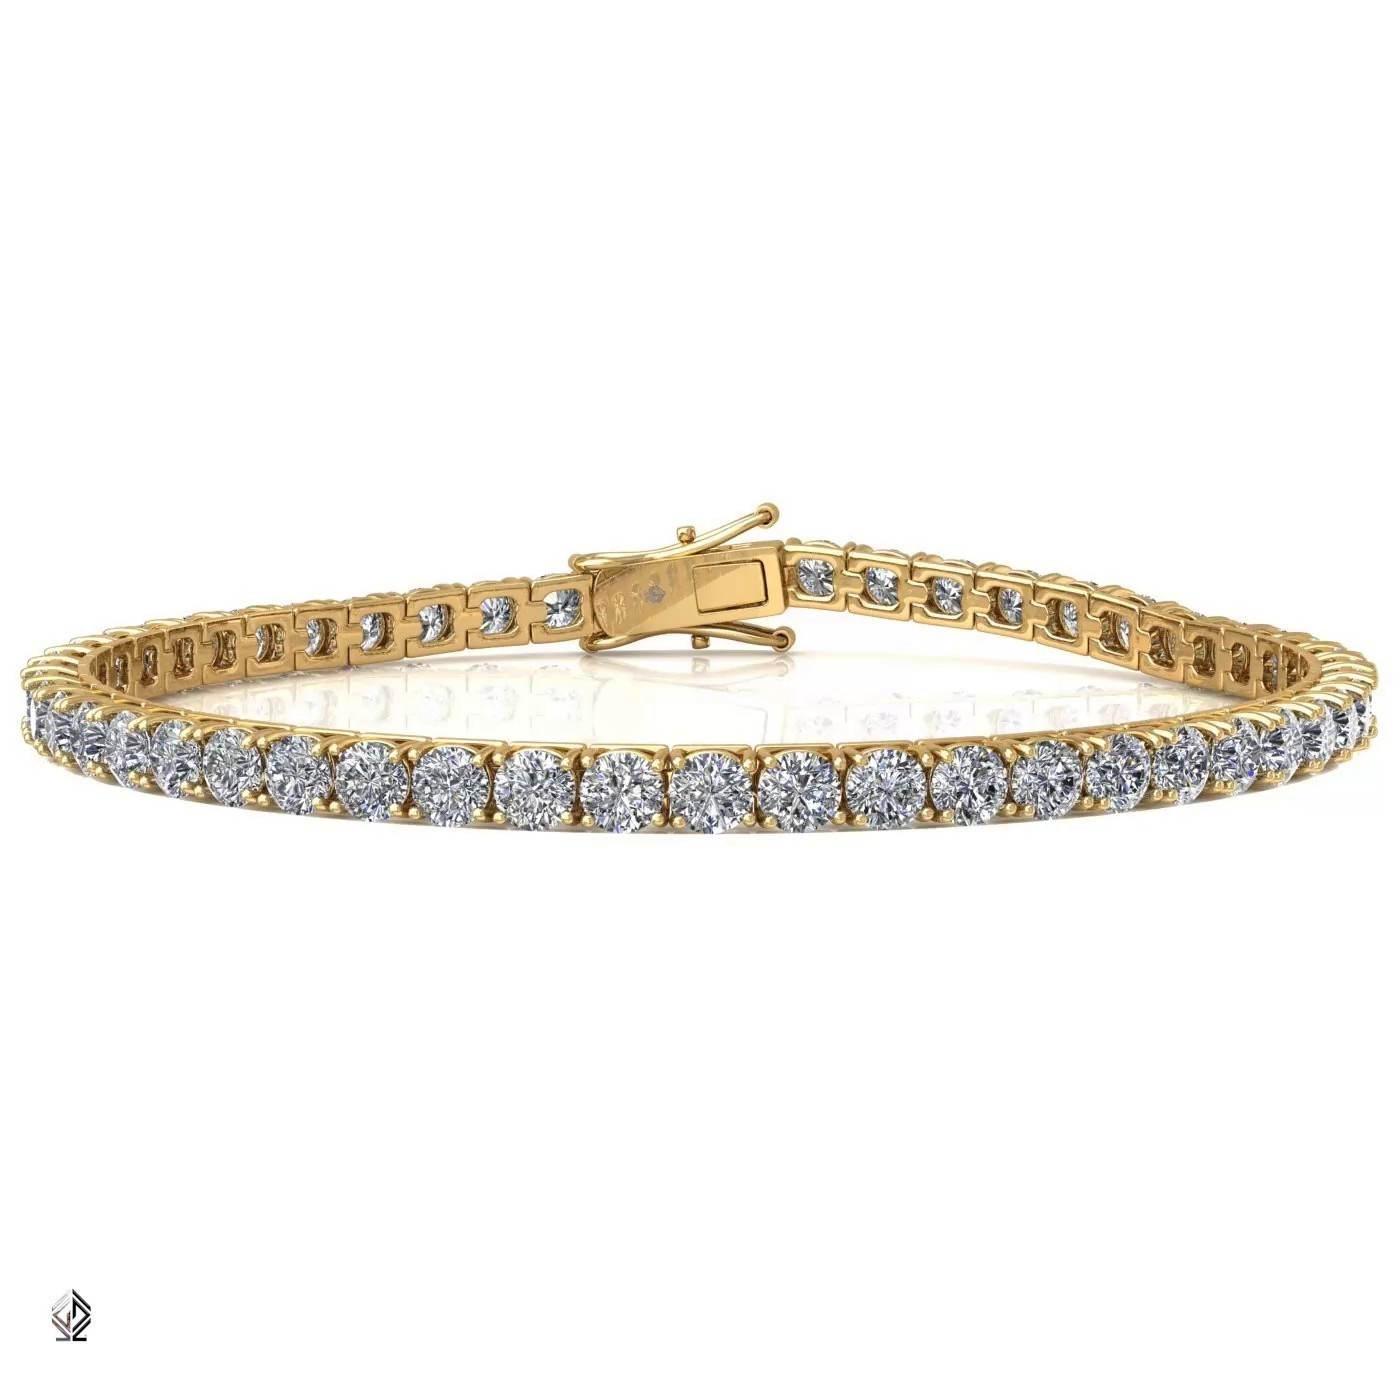 18k white gold 2.6mm 4 prong round shape diamond tennis bracelet in square setting Photos & images